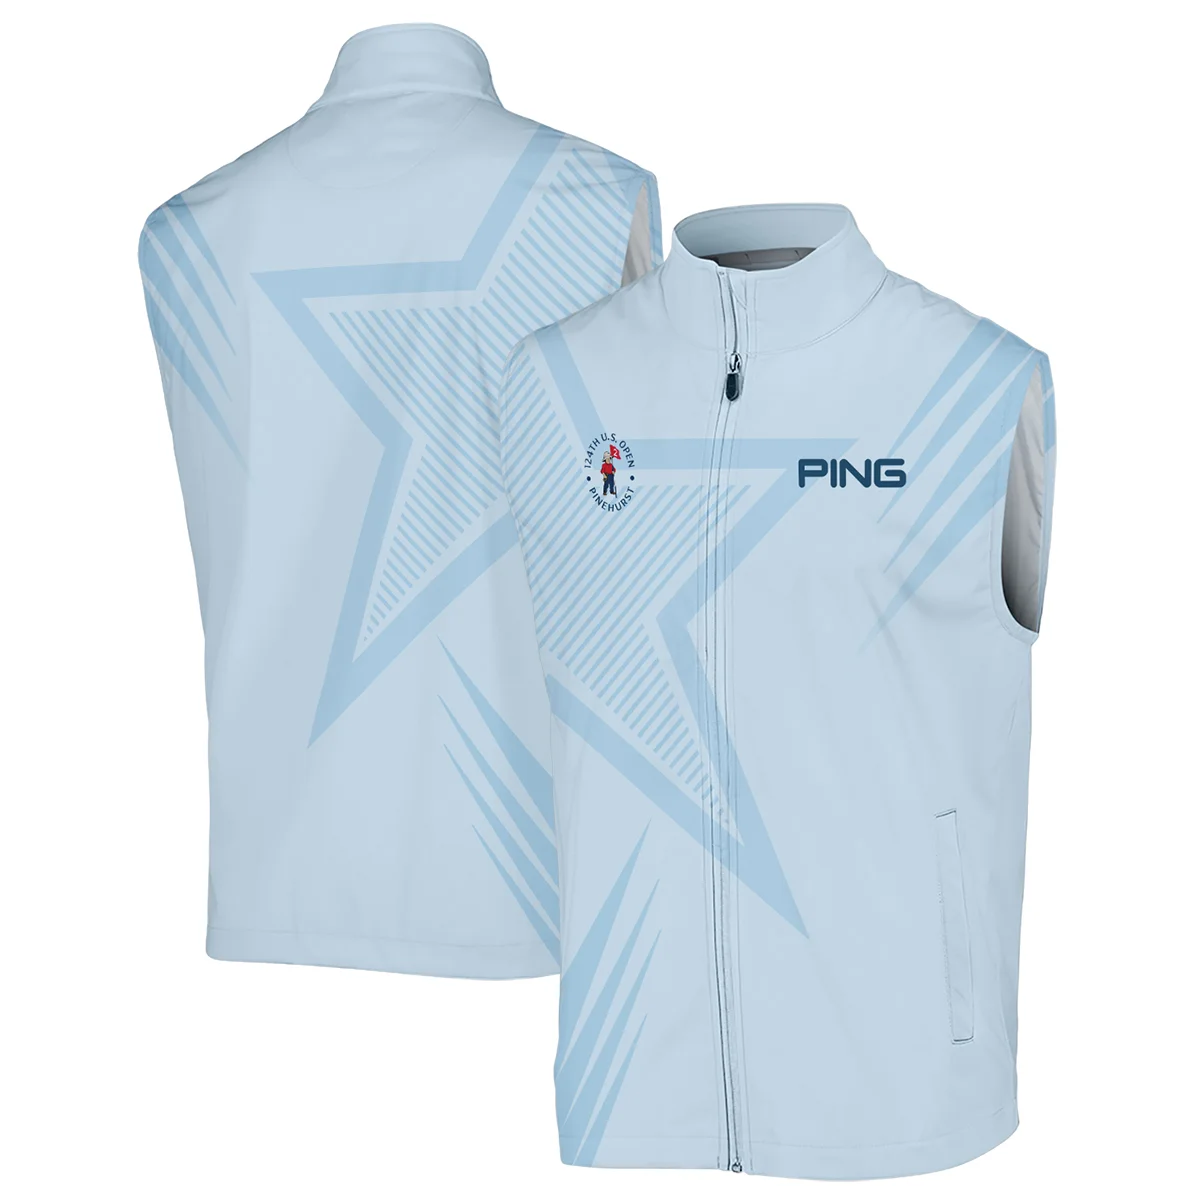 124th U.S. Open Pinehurst Golf Star Line Pattern Light Blue Ping Vneck Polo Shirt Style Classic Polo Shirt For Men